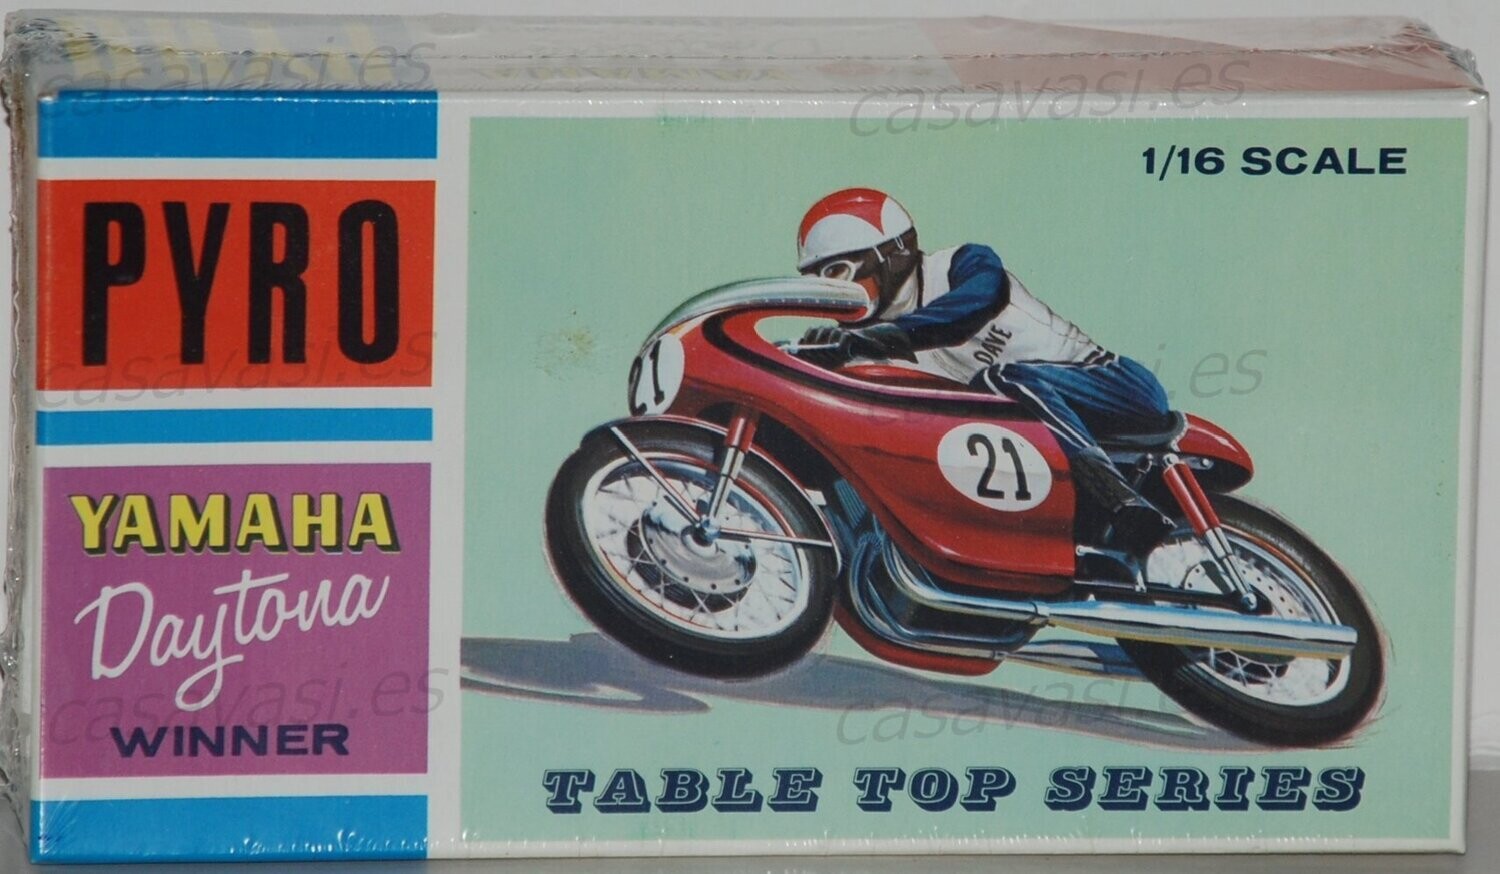 Pyro - 1967 - m154-125 - 1/16 - Nº 4 - Yamaha Racing Cycle Daytona Winner
Box Sixe 20.5 x 11 cm.